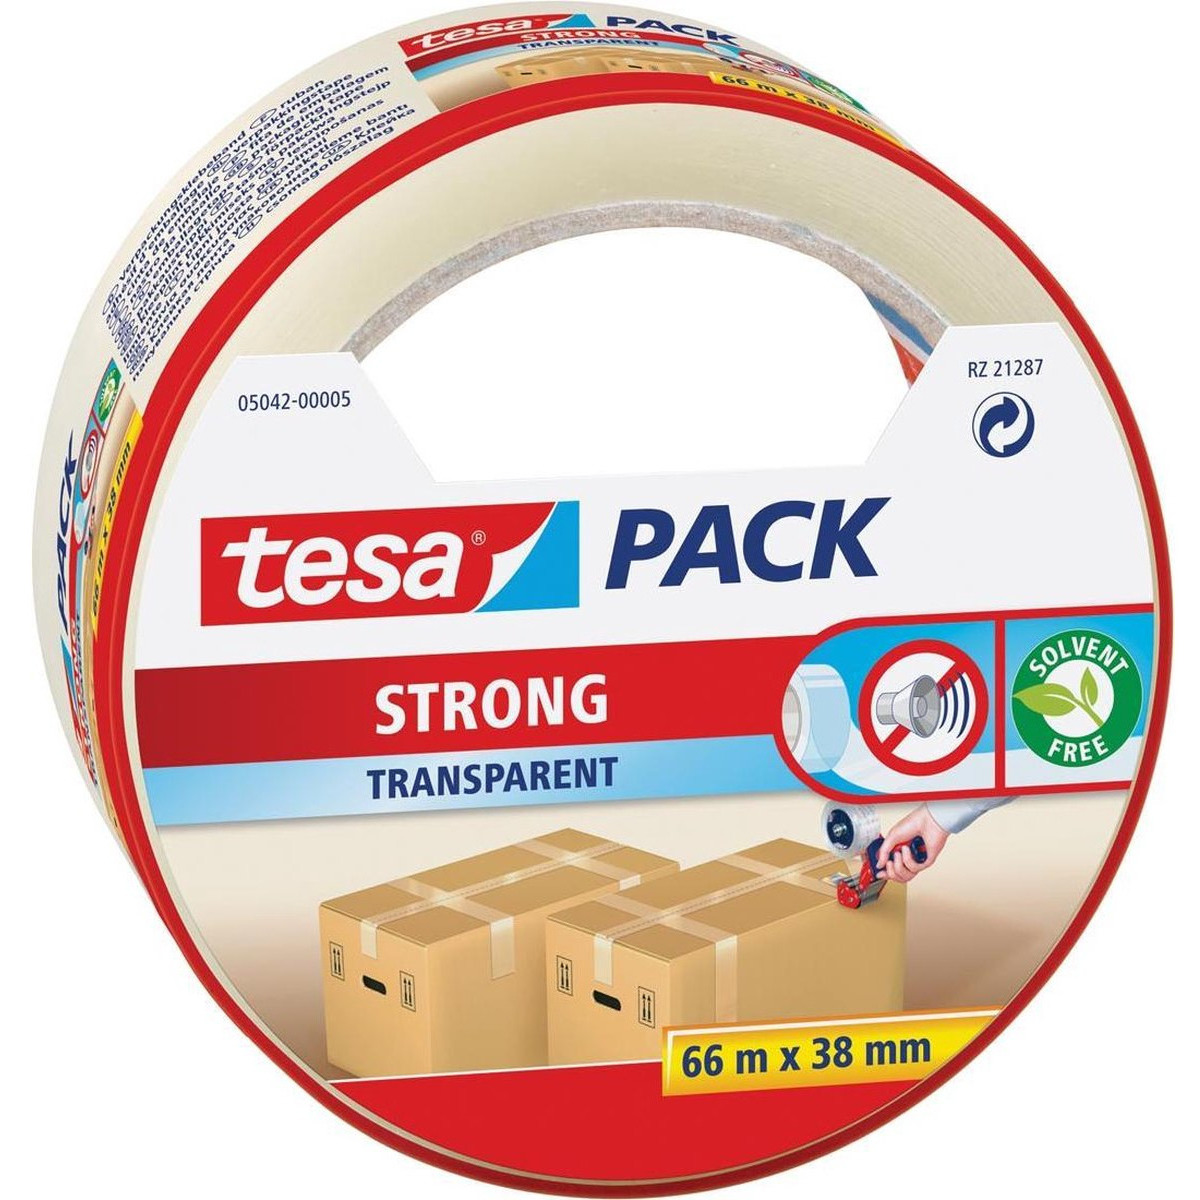 1x Tesa verpakkingstape sterk transparant 66 mtr x 38 mm verpakkingsbenodigdheden